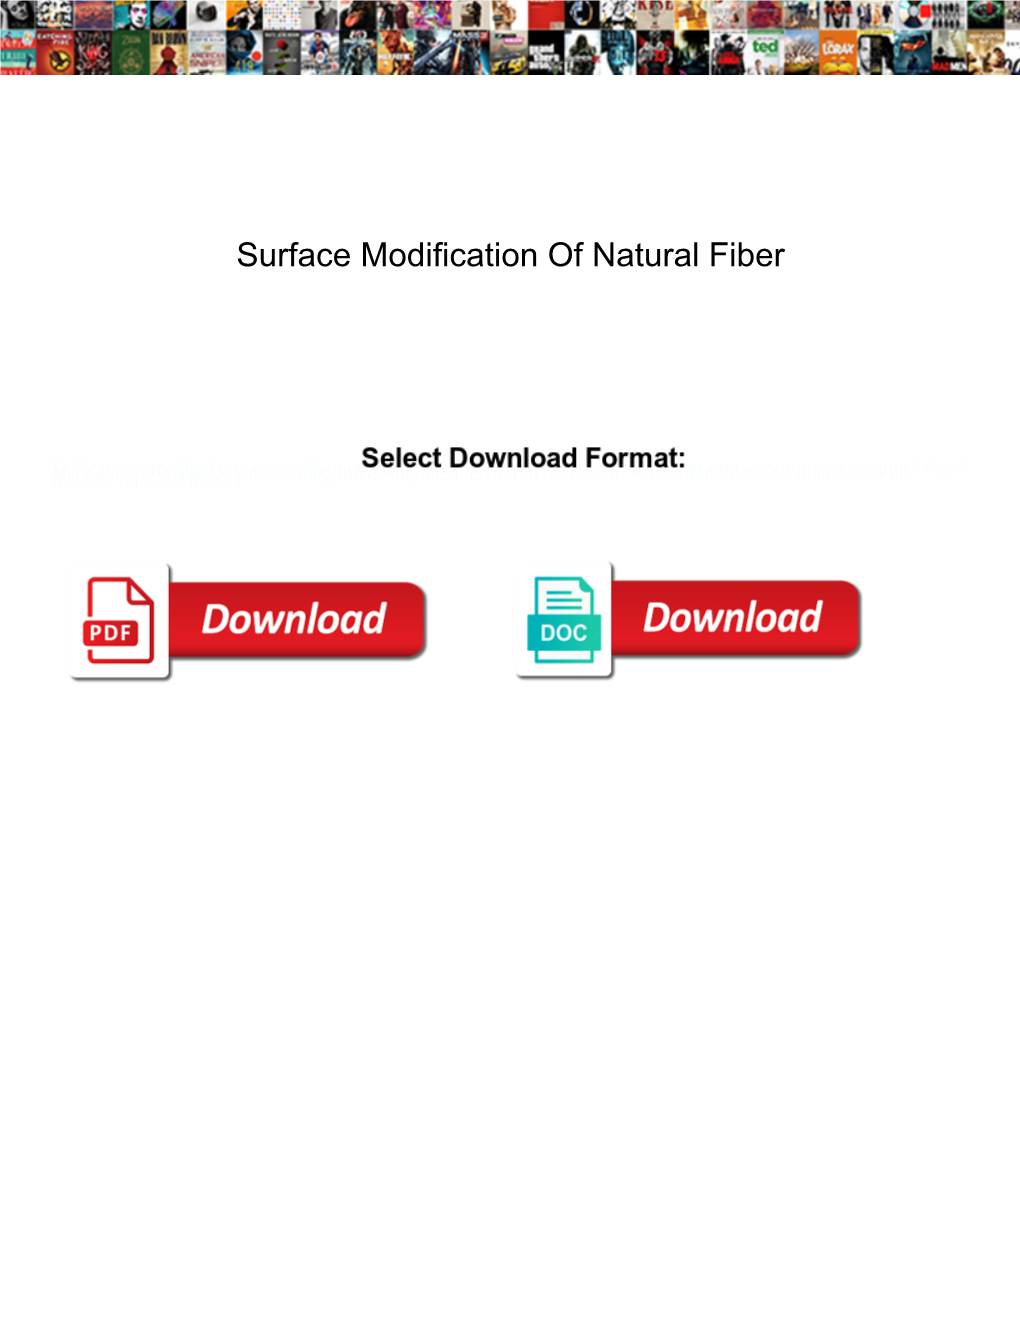 Surface Modification of Natural Fiber